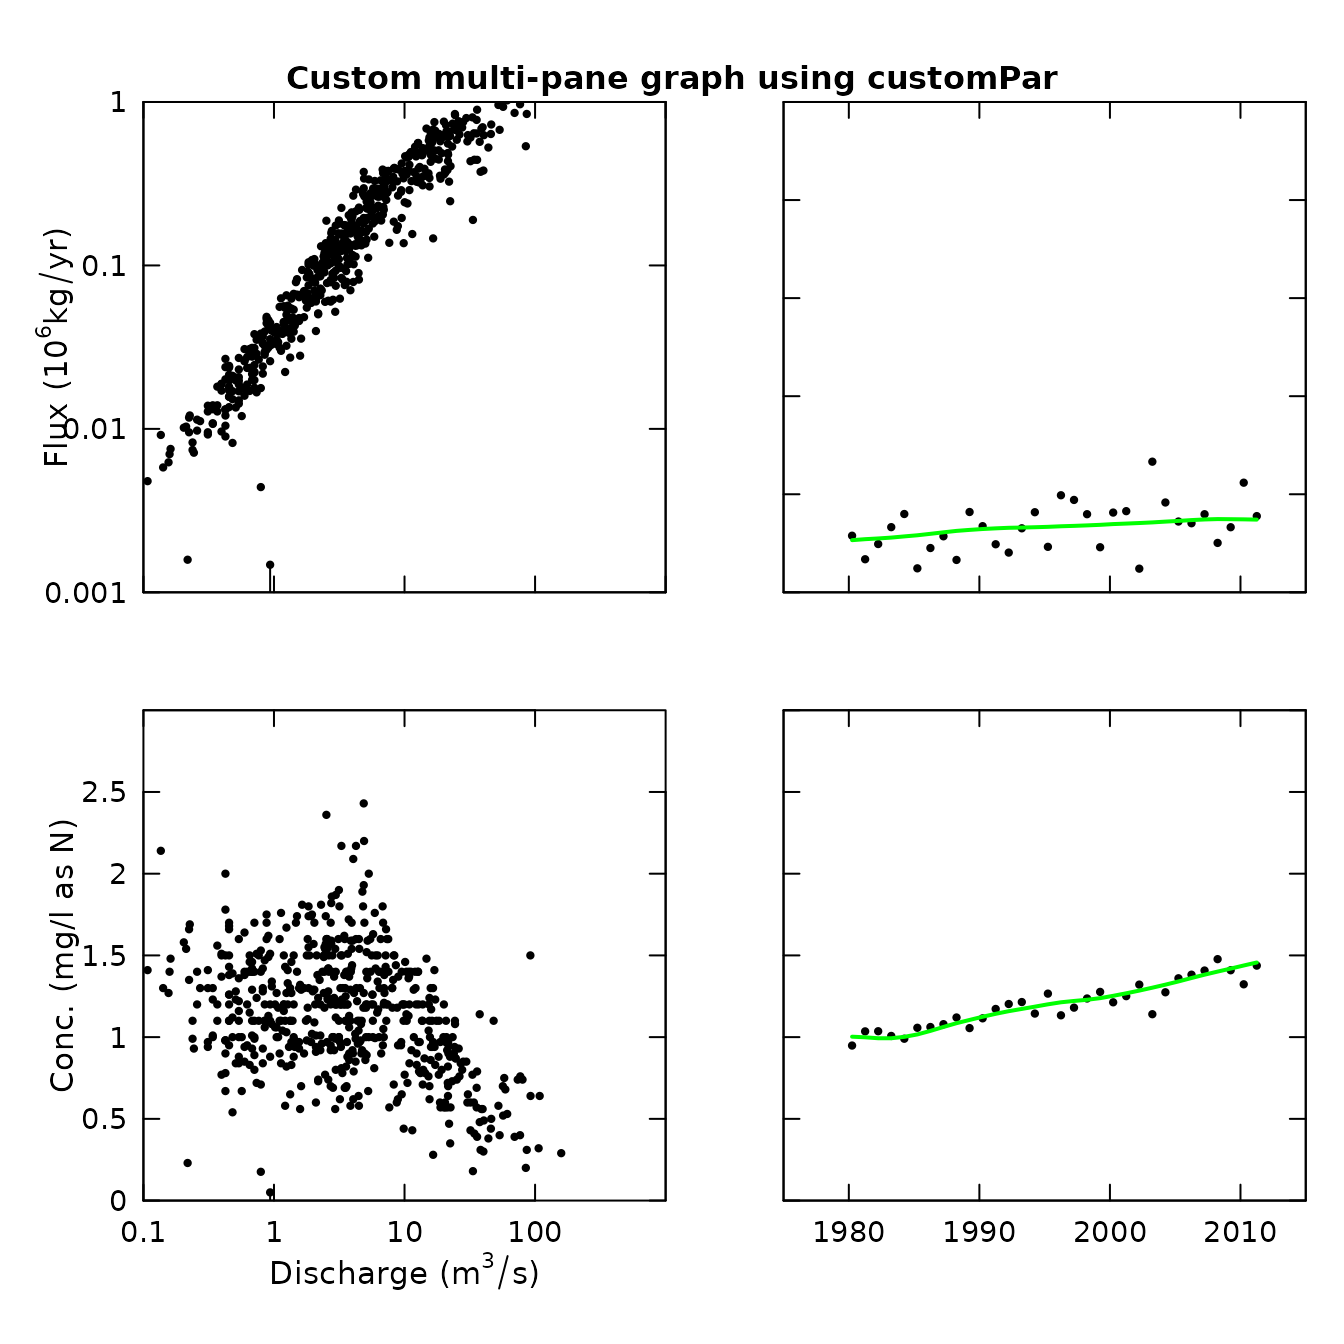 Custom multipanel plot